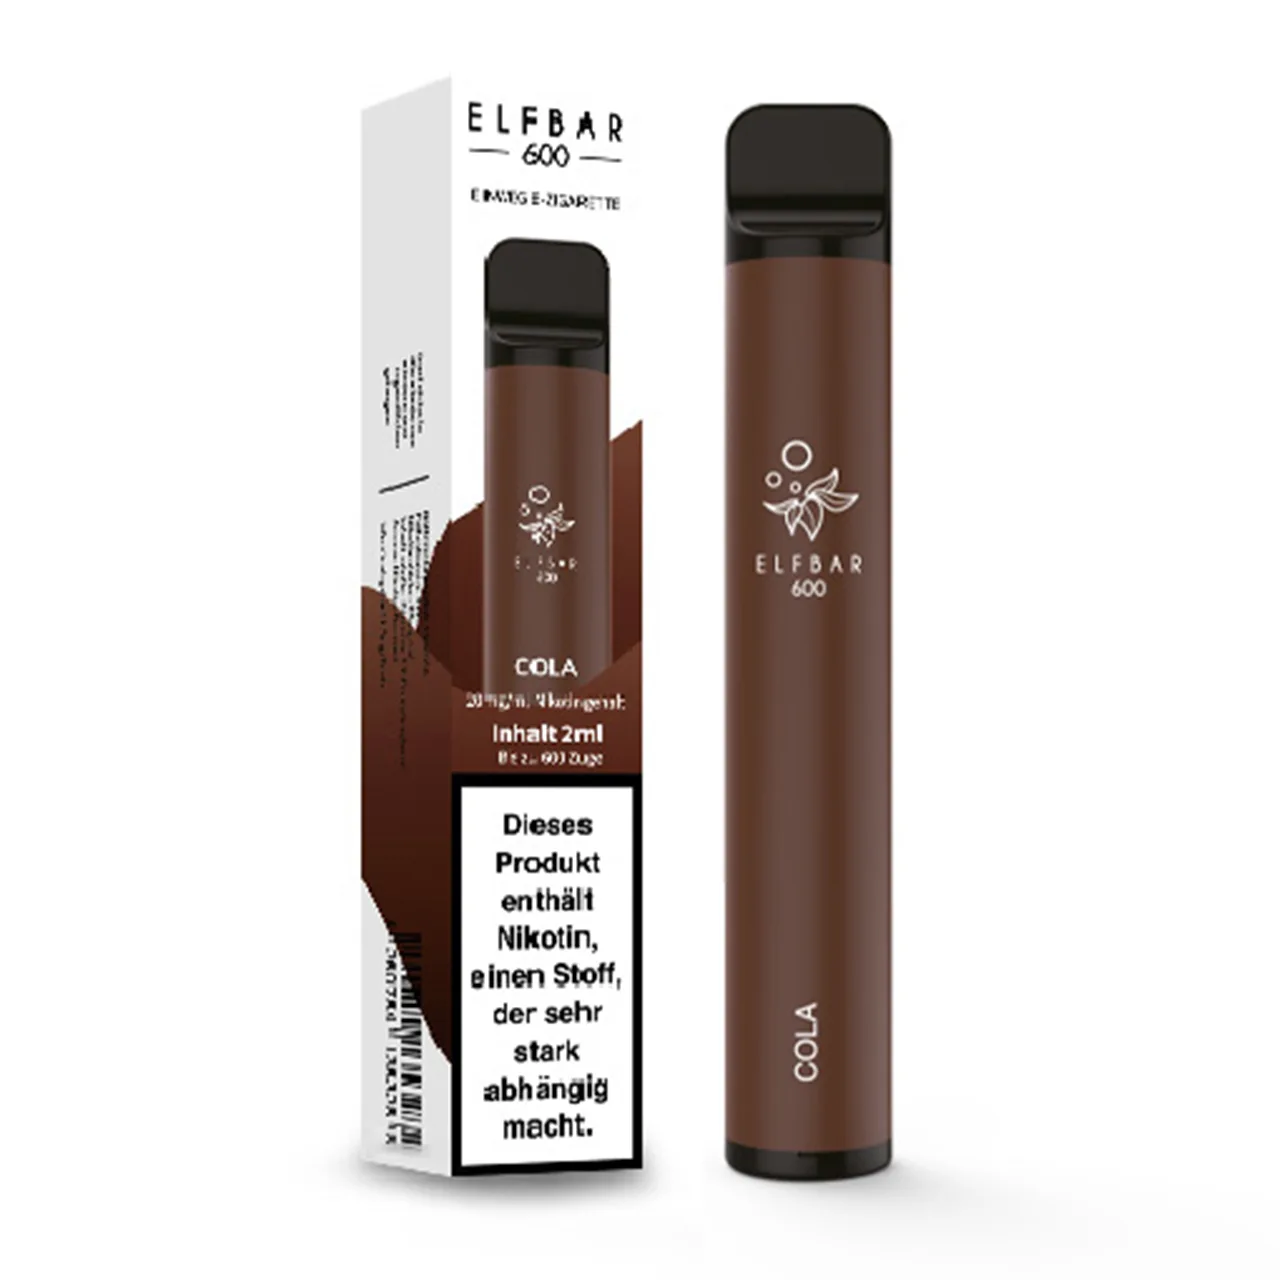 Elf Bar 600 Cola Einweg E-Zigarette Verpackung